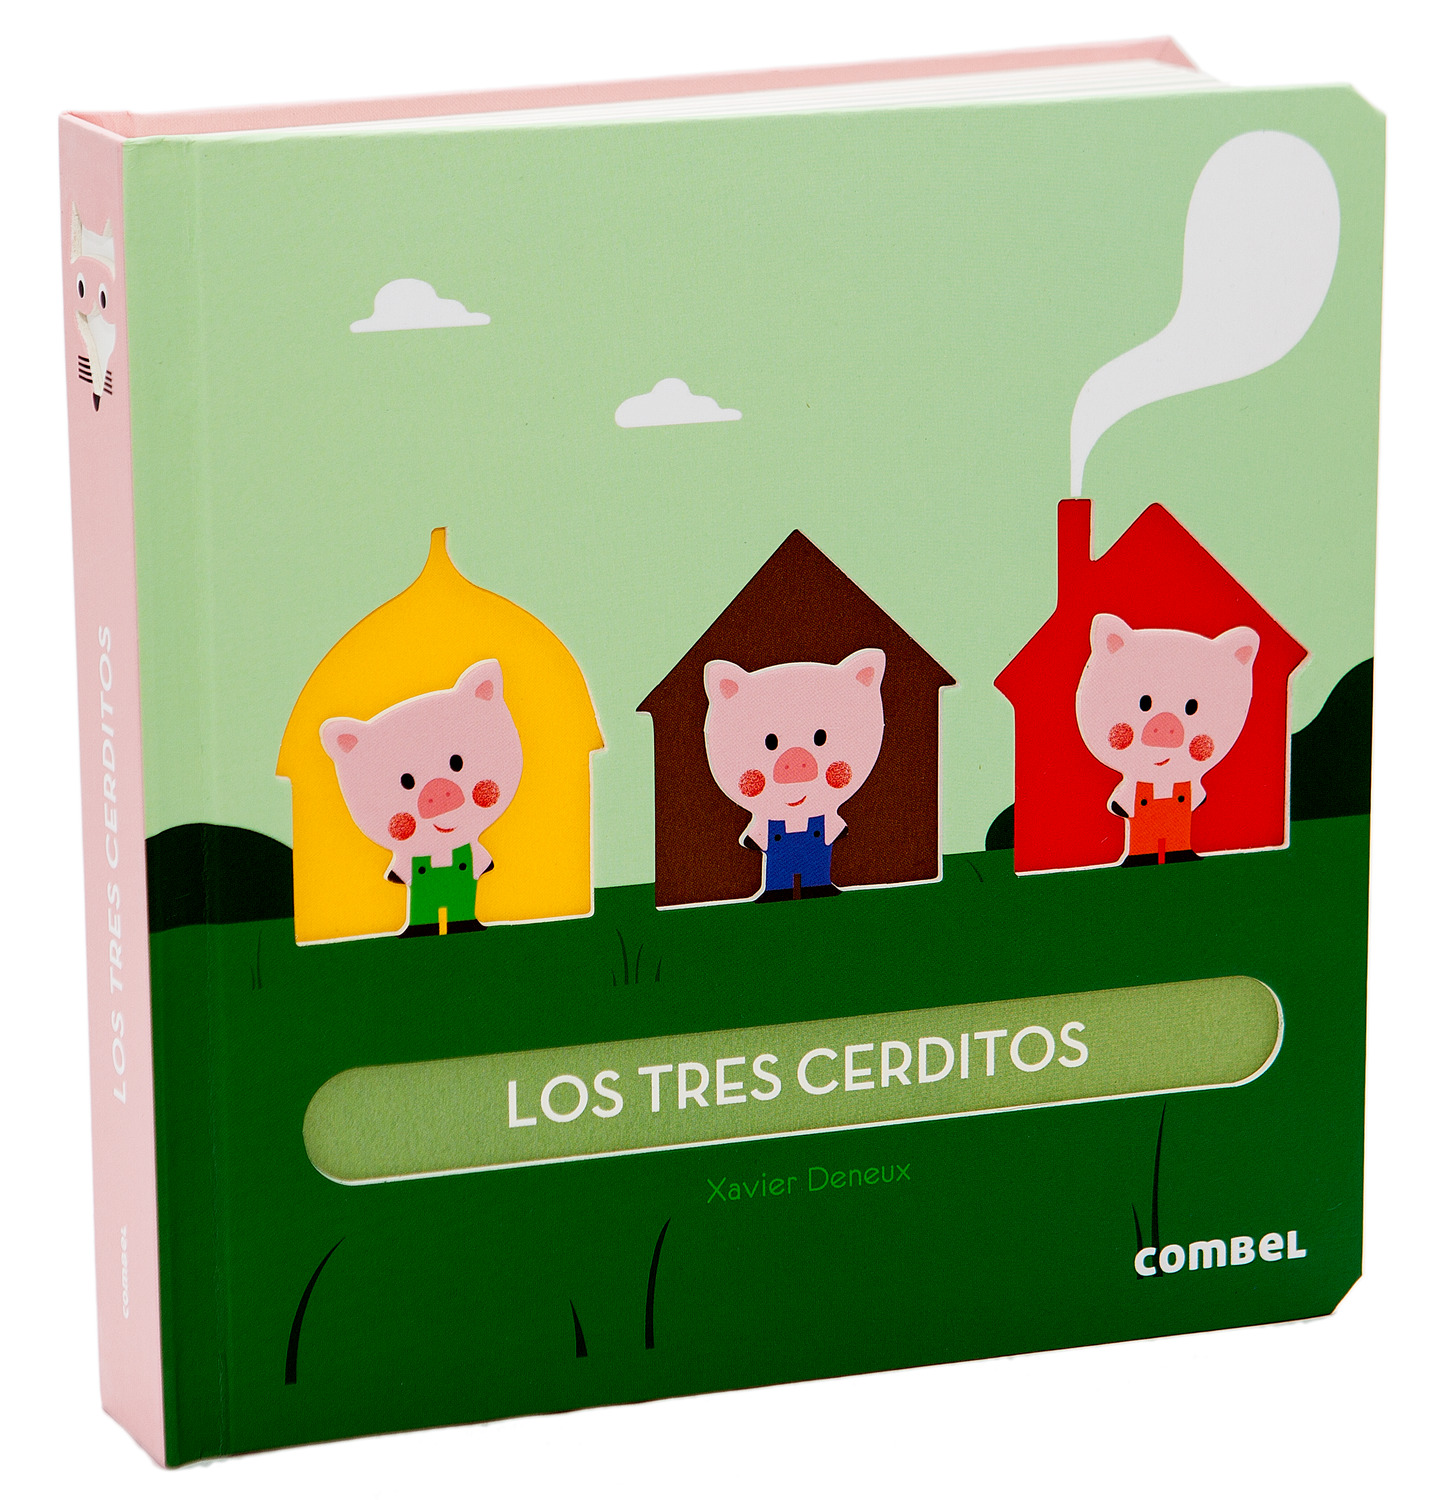 Los tres cerditos – Happy Hobby Books and Play